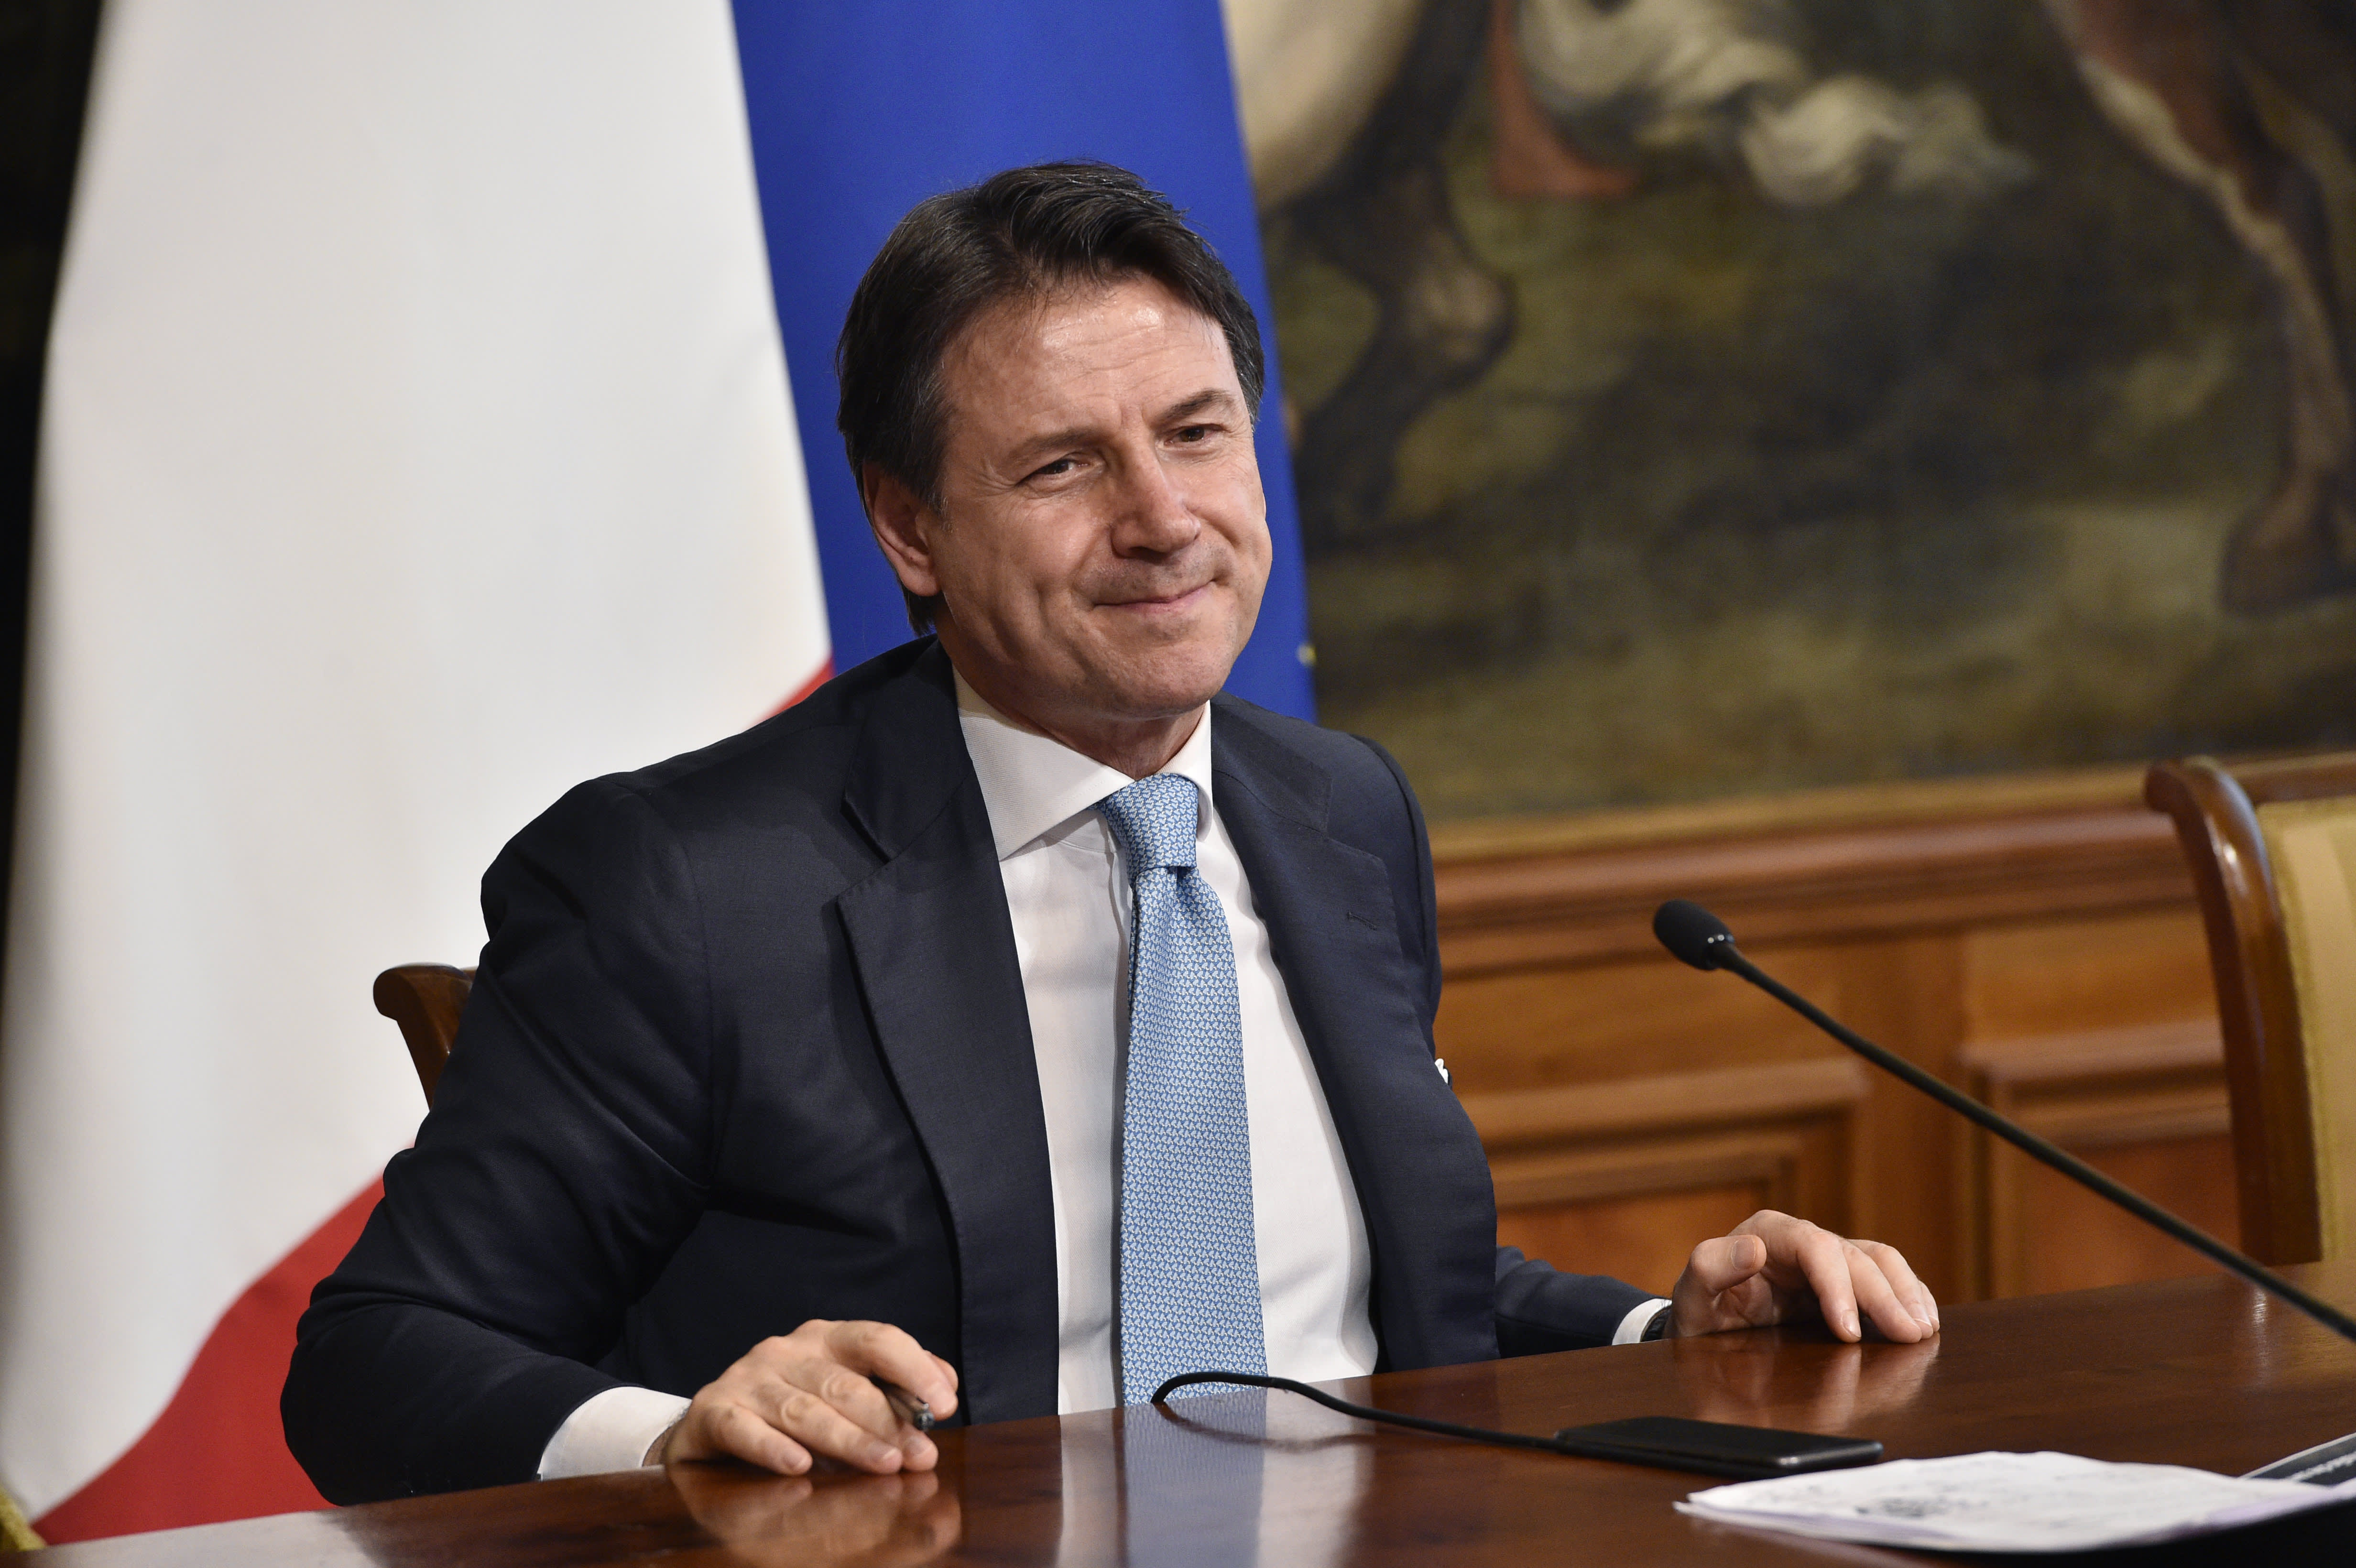 Italian Prime Minister Giuseppe Conte resigns amid political crisis